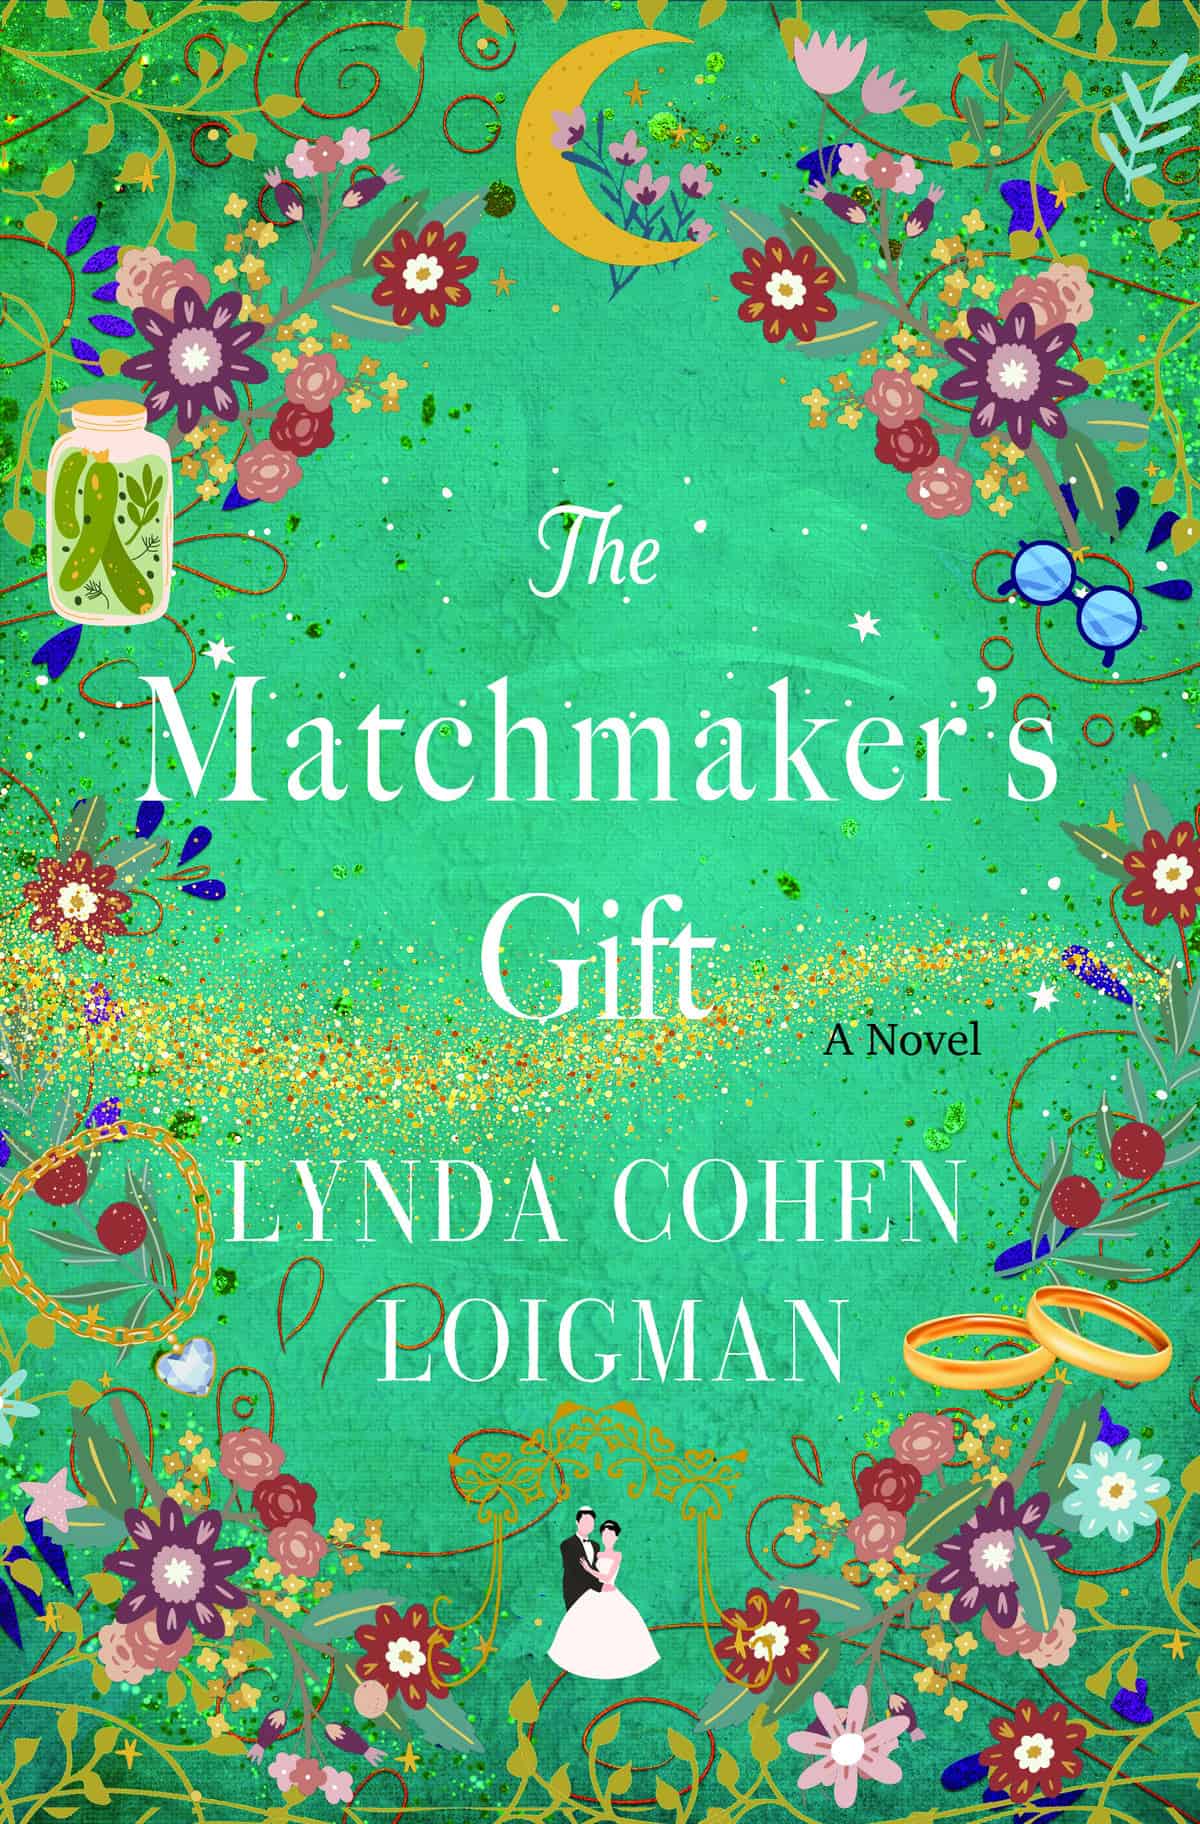 Linda Cohen Loigman’s novel tells intergenerational story of matchmaking